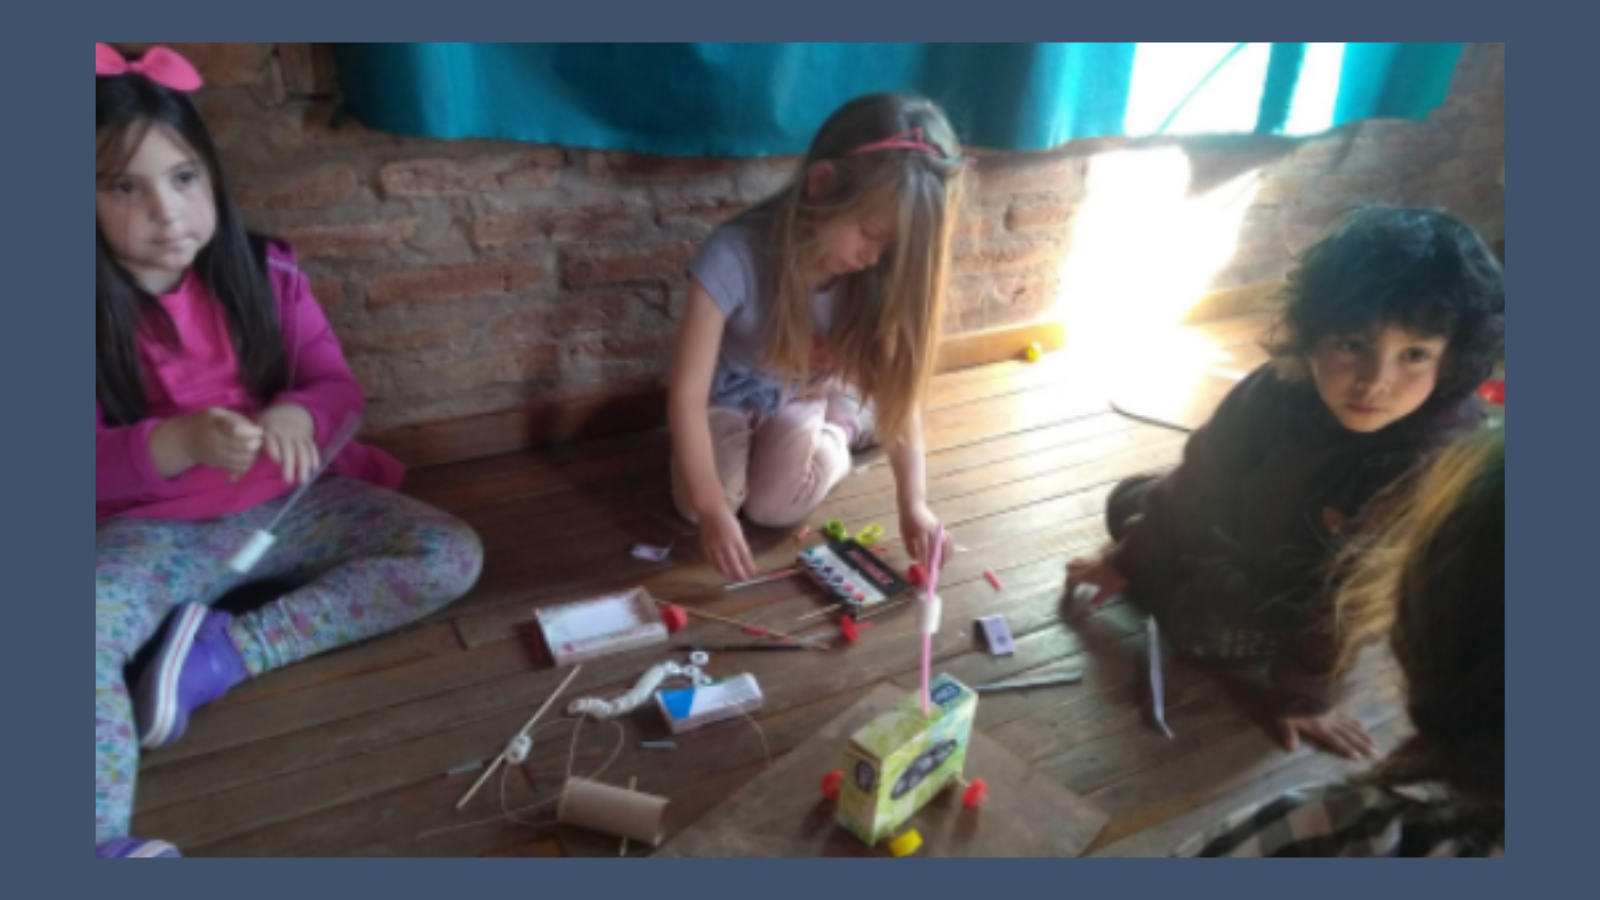 Children on floor building a toy